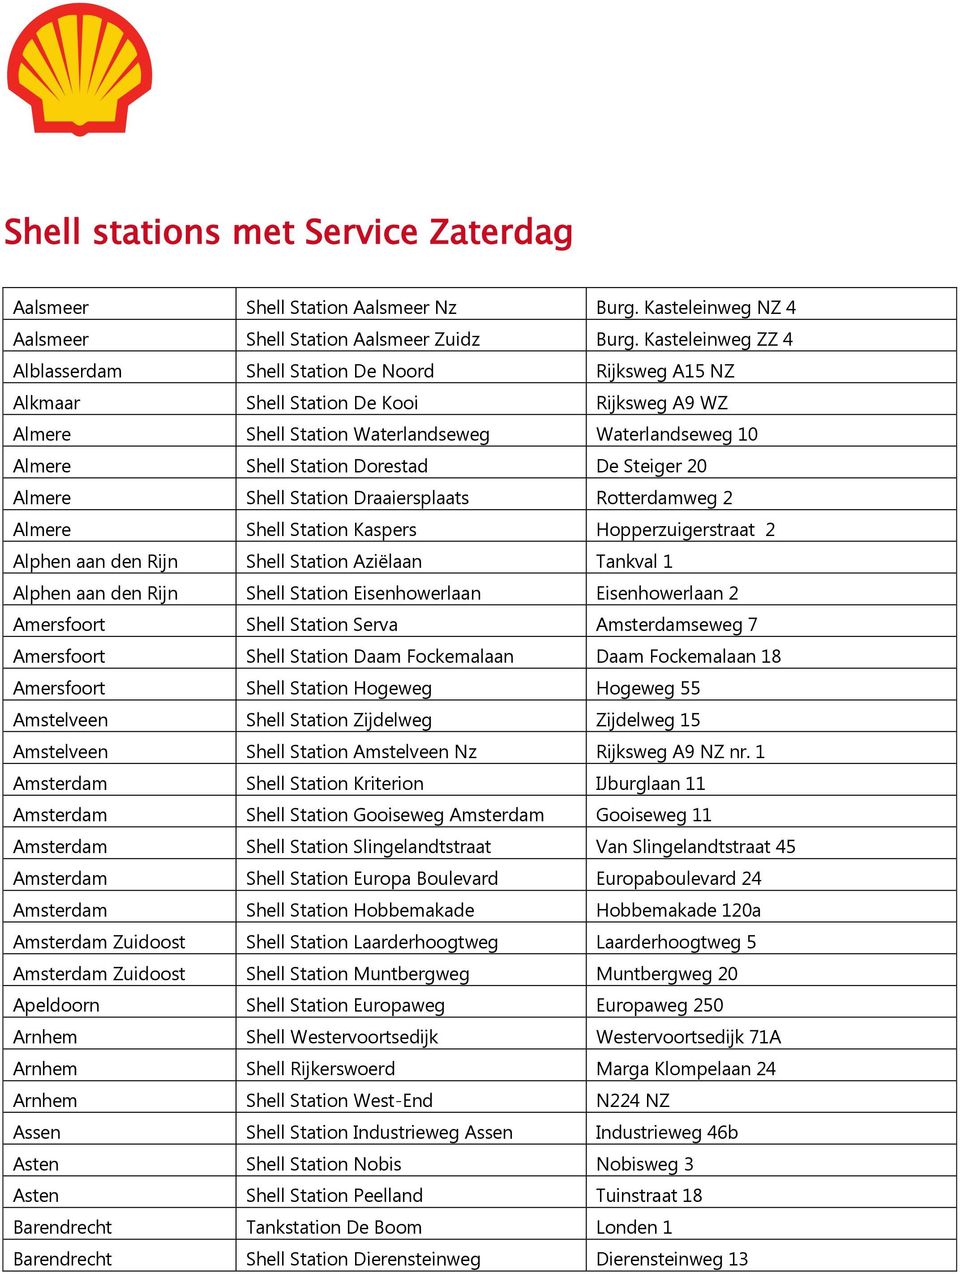 De Steiger 20 Almere Shell Station Draaiersplaats Rotterdamweg 2 Almere Shell Station Kaspers Hopperzuigerstraat 2 Alphen aan den Rijn Shell Station Aziëlaan Tankval 1 Alphen aan den Rijn Shell